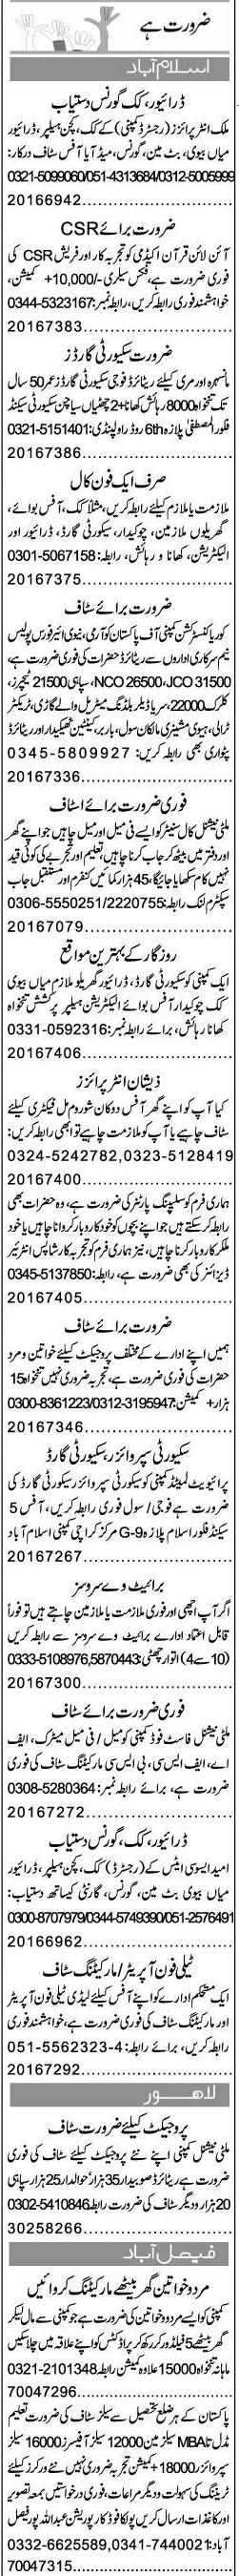 Misc. Jobs in Islamabad/Rawalpindi Express Classified